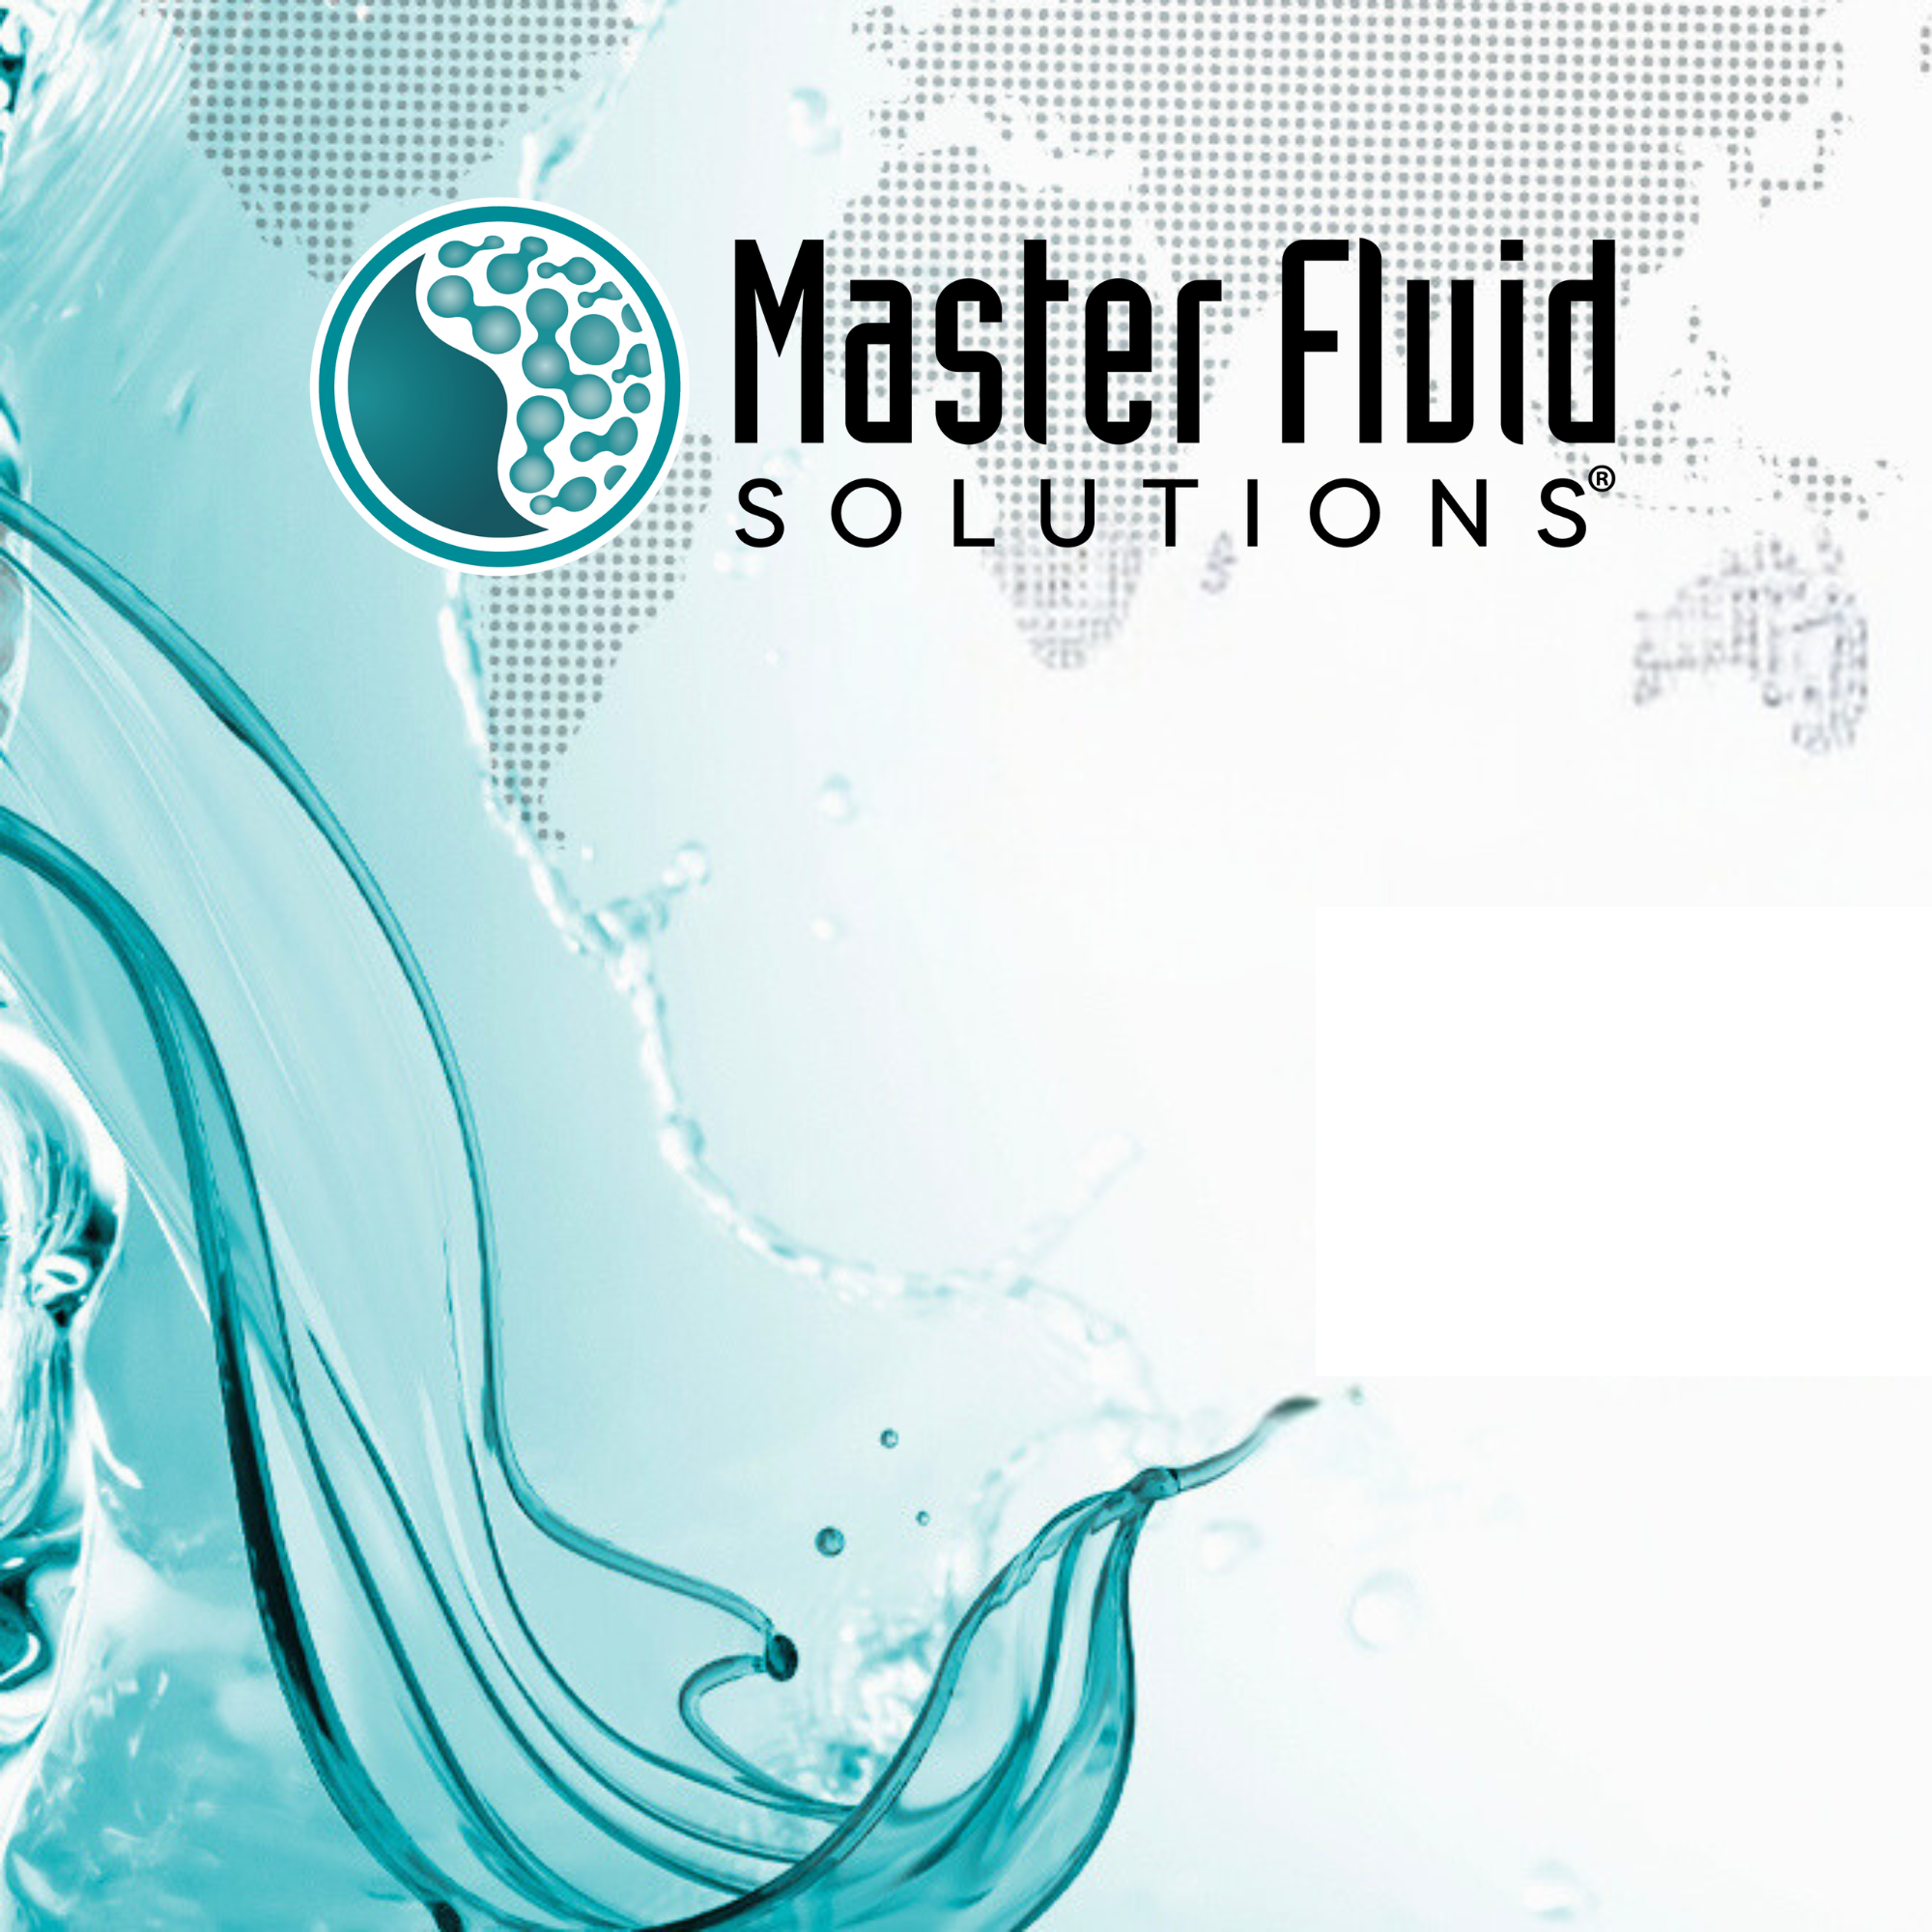 The Master Fluid Solutions logo.